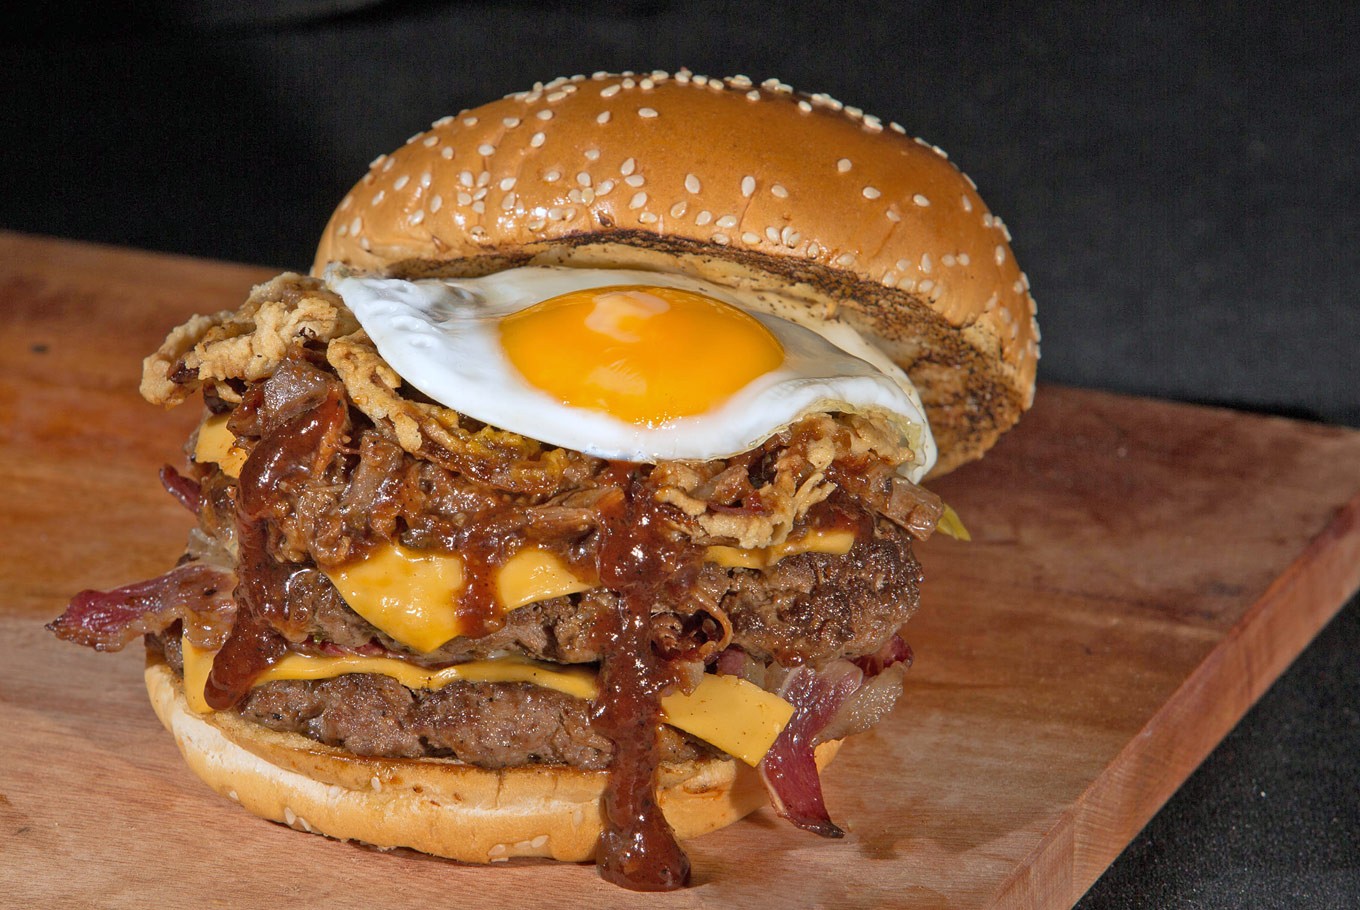 Lawless Burger promises guilty pleasure - Food - The Jakarta Post